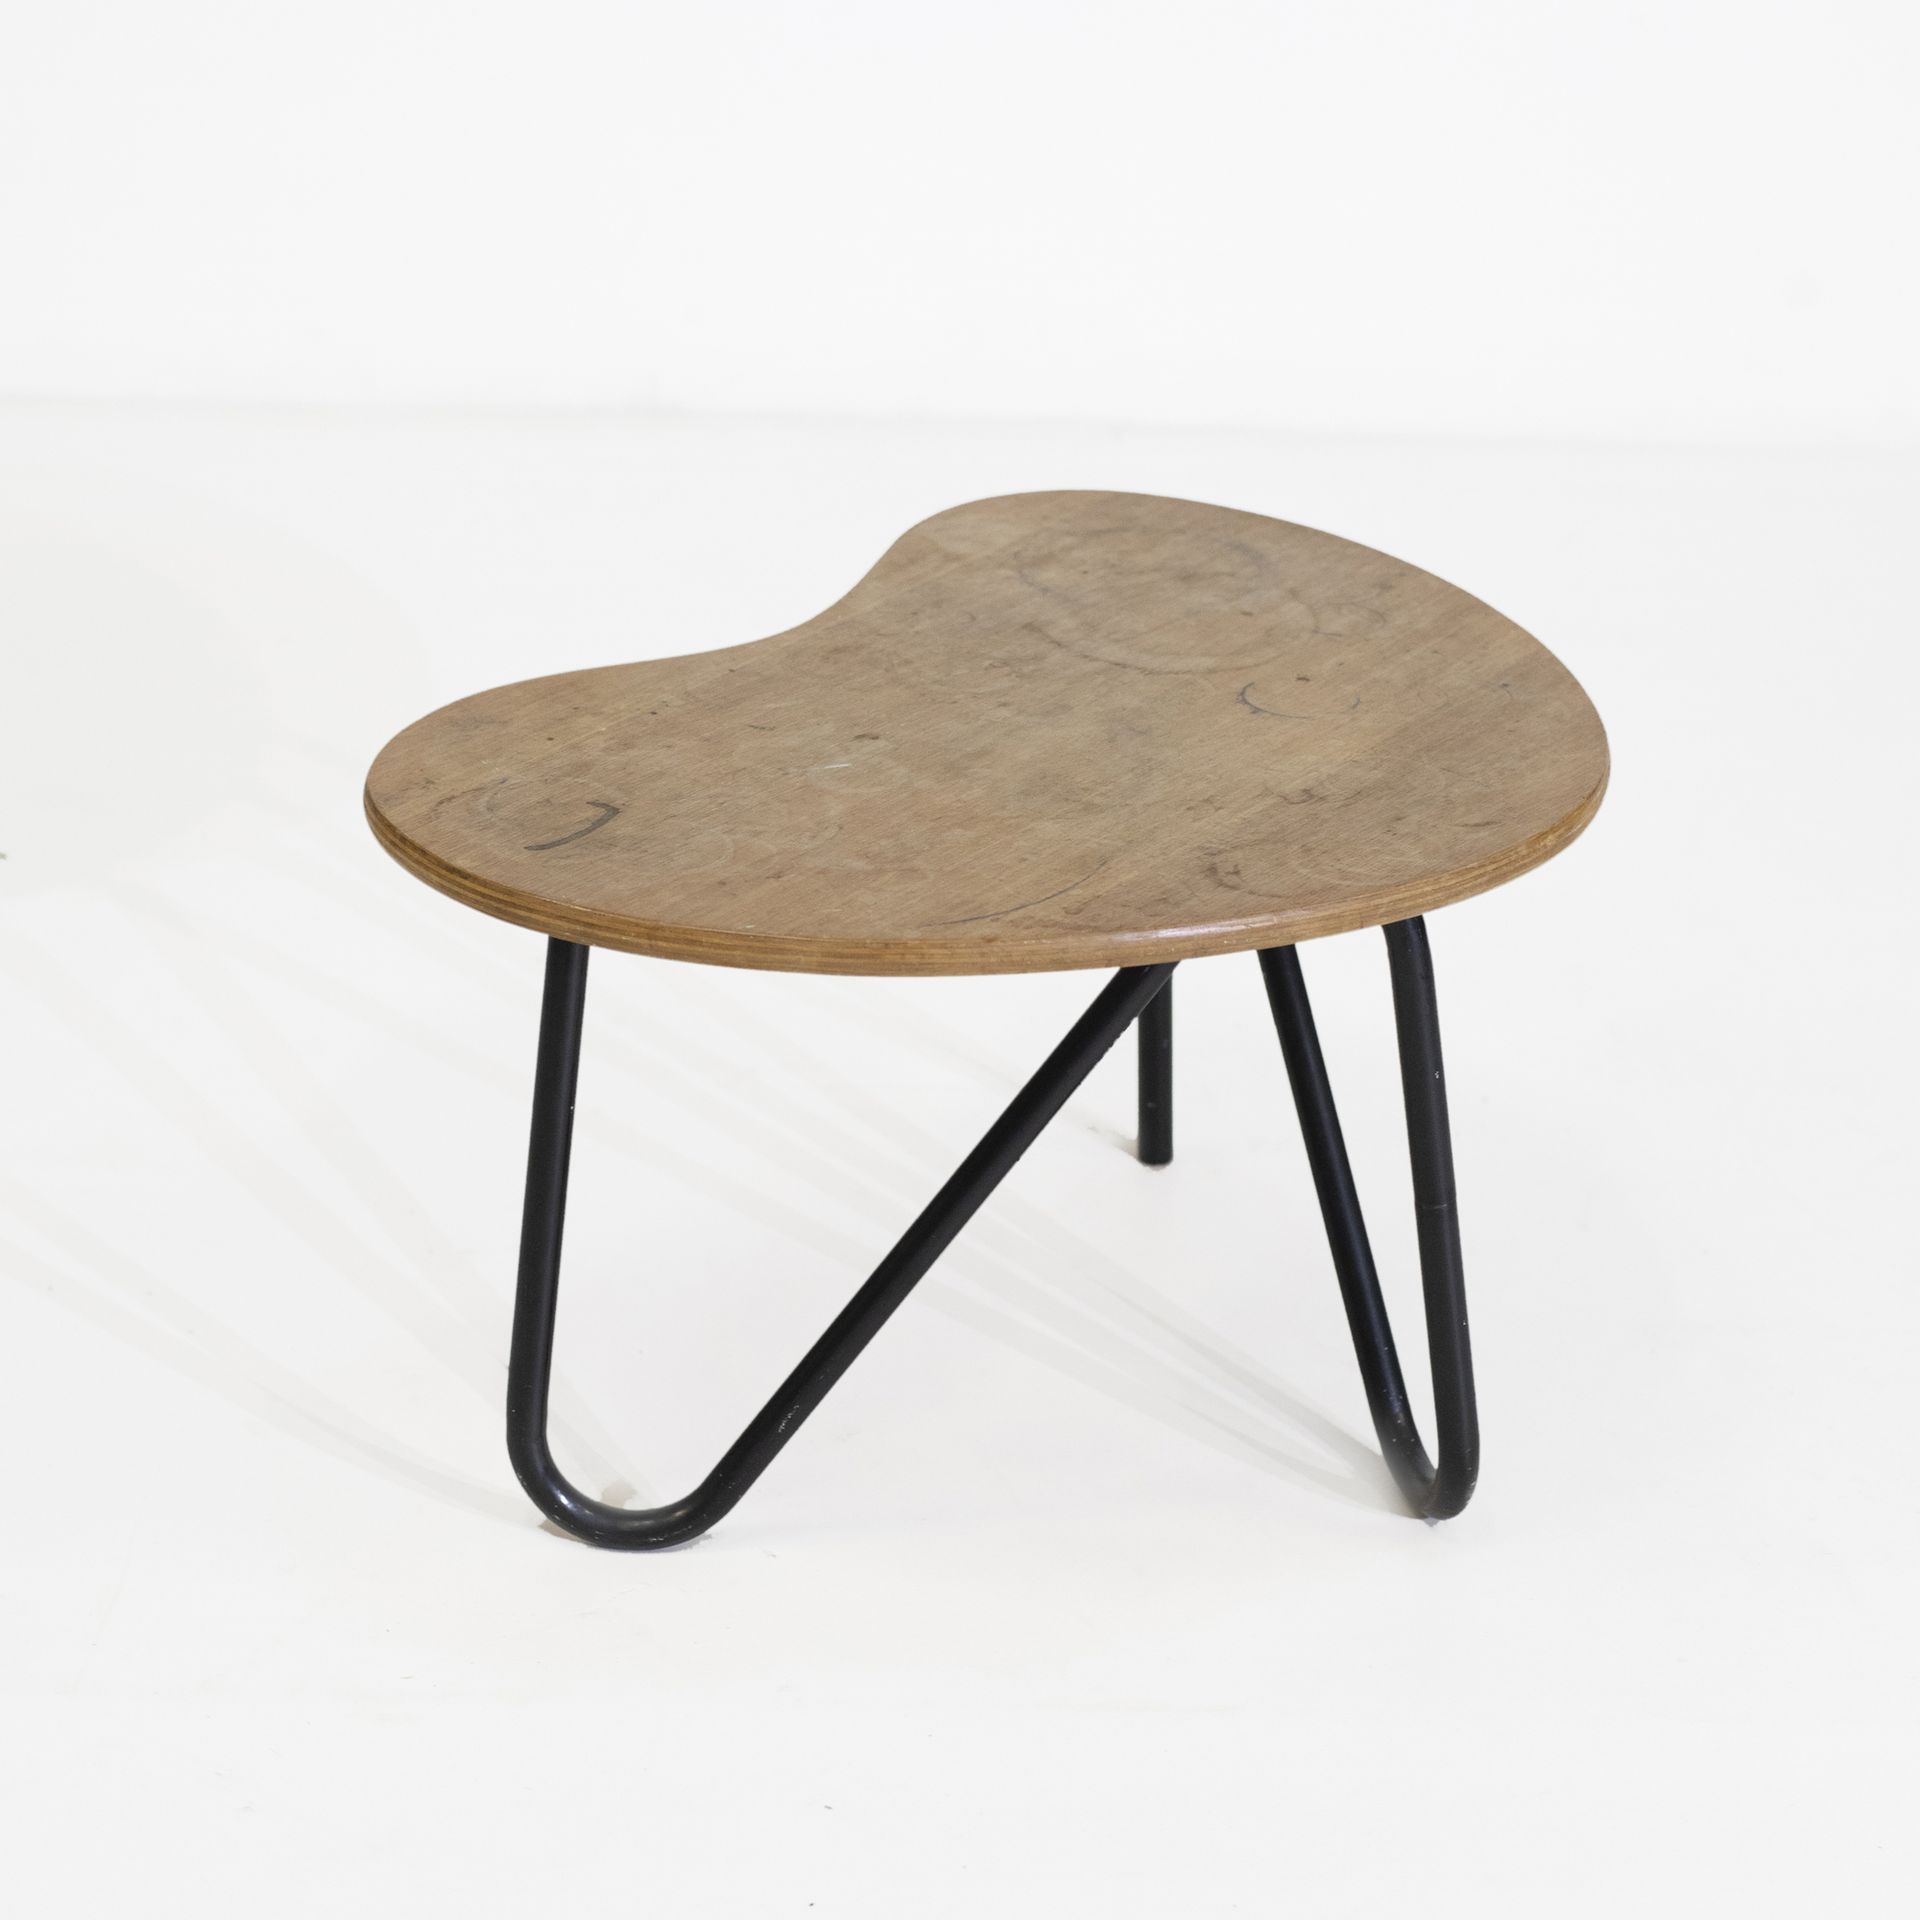 Pierre GUARICHE (1926-1995) 豆 "模型表

黑色漆面金属和橡木饰面

空降版

约1955年

高_42,5厘米 宽_68,5厘米 &hellip;